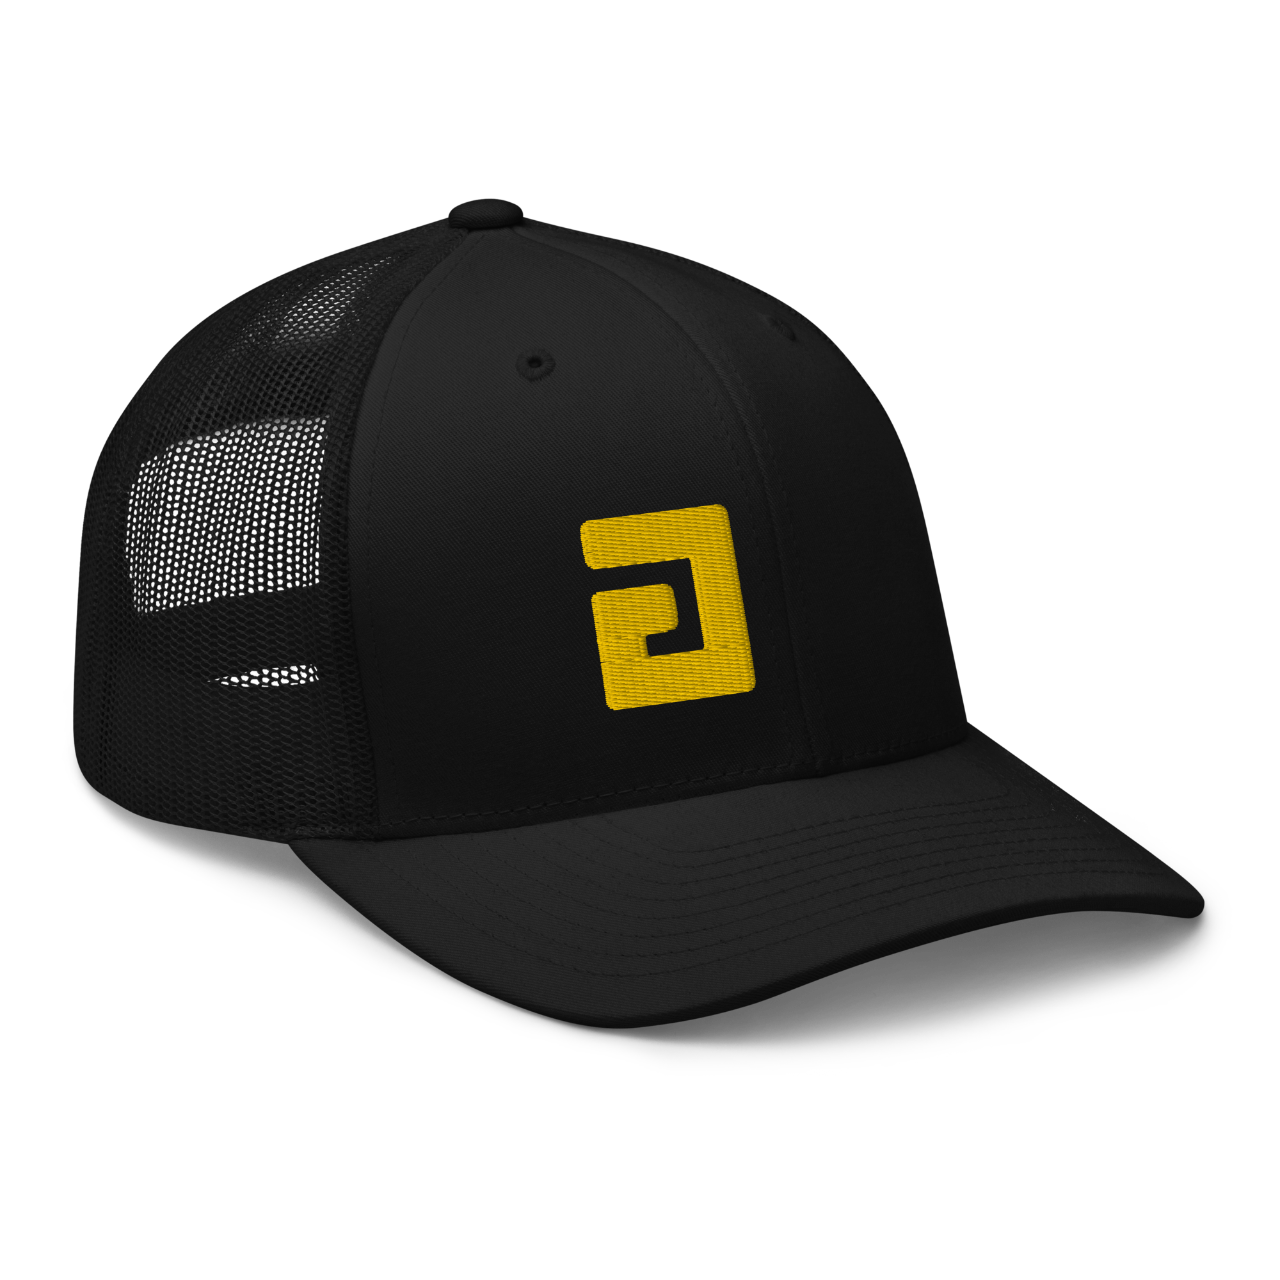 axsgtr axess electronics guitar music industry branded merchandise swag trucker cap hat black yellow